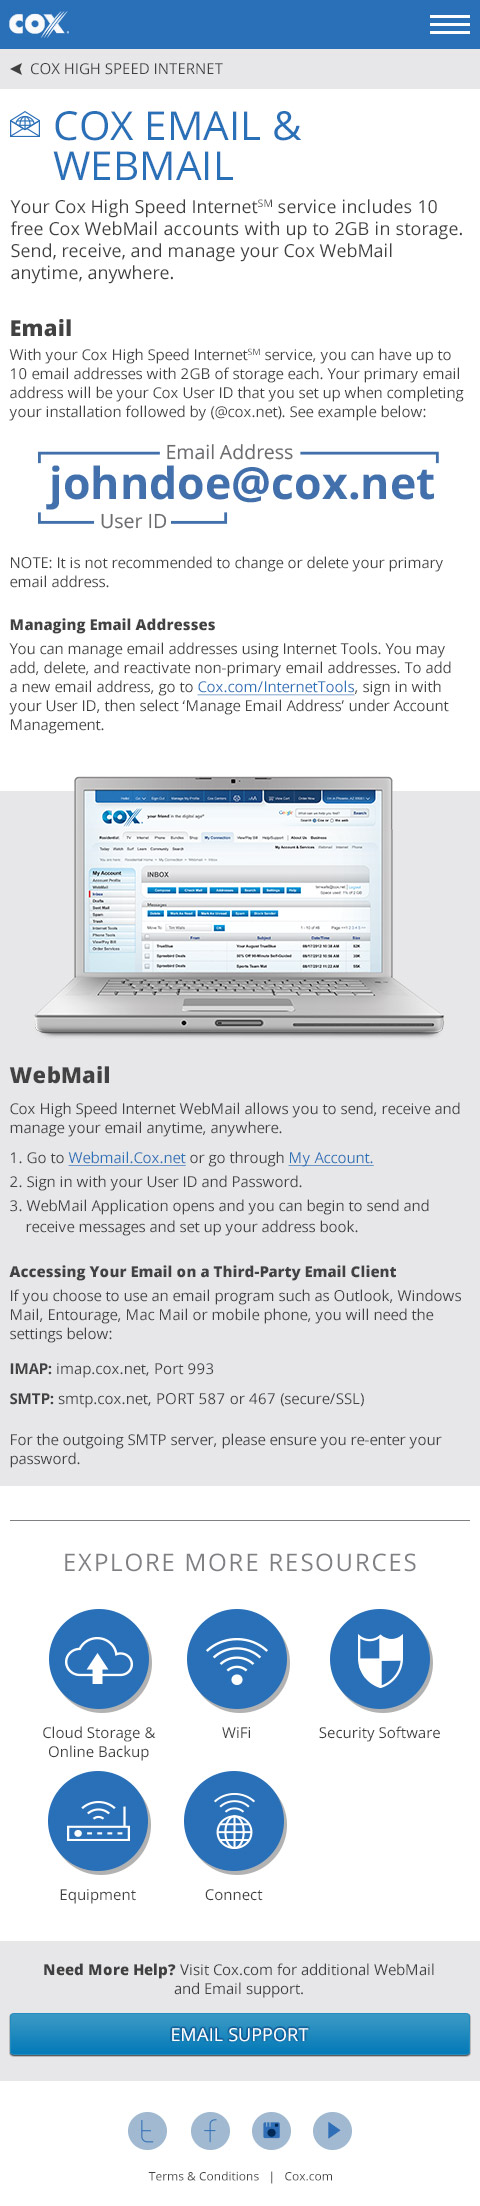 WelcomeCenter_Internet_Email_Mobile.jpg